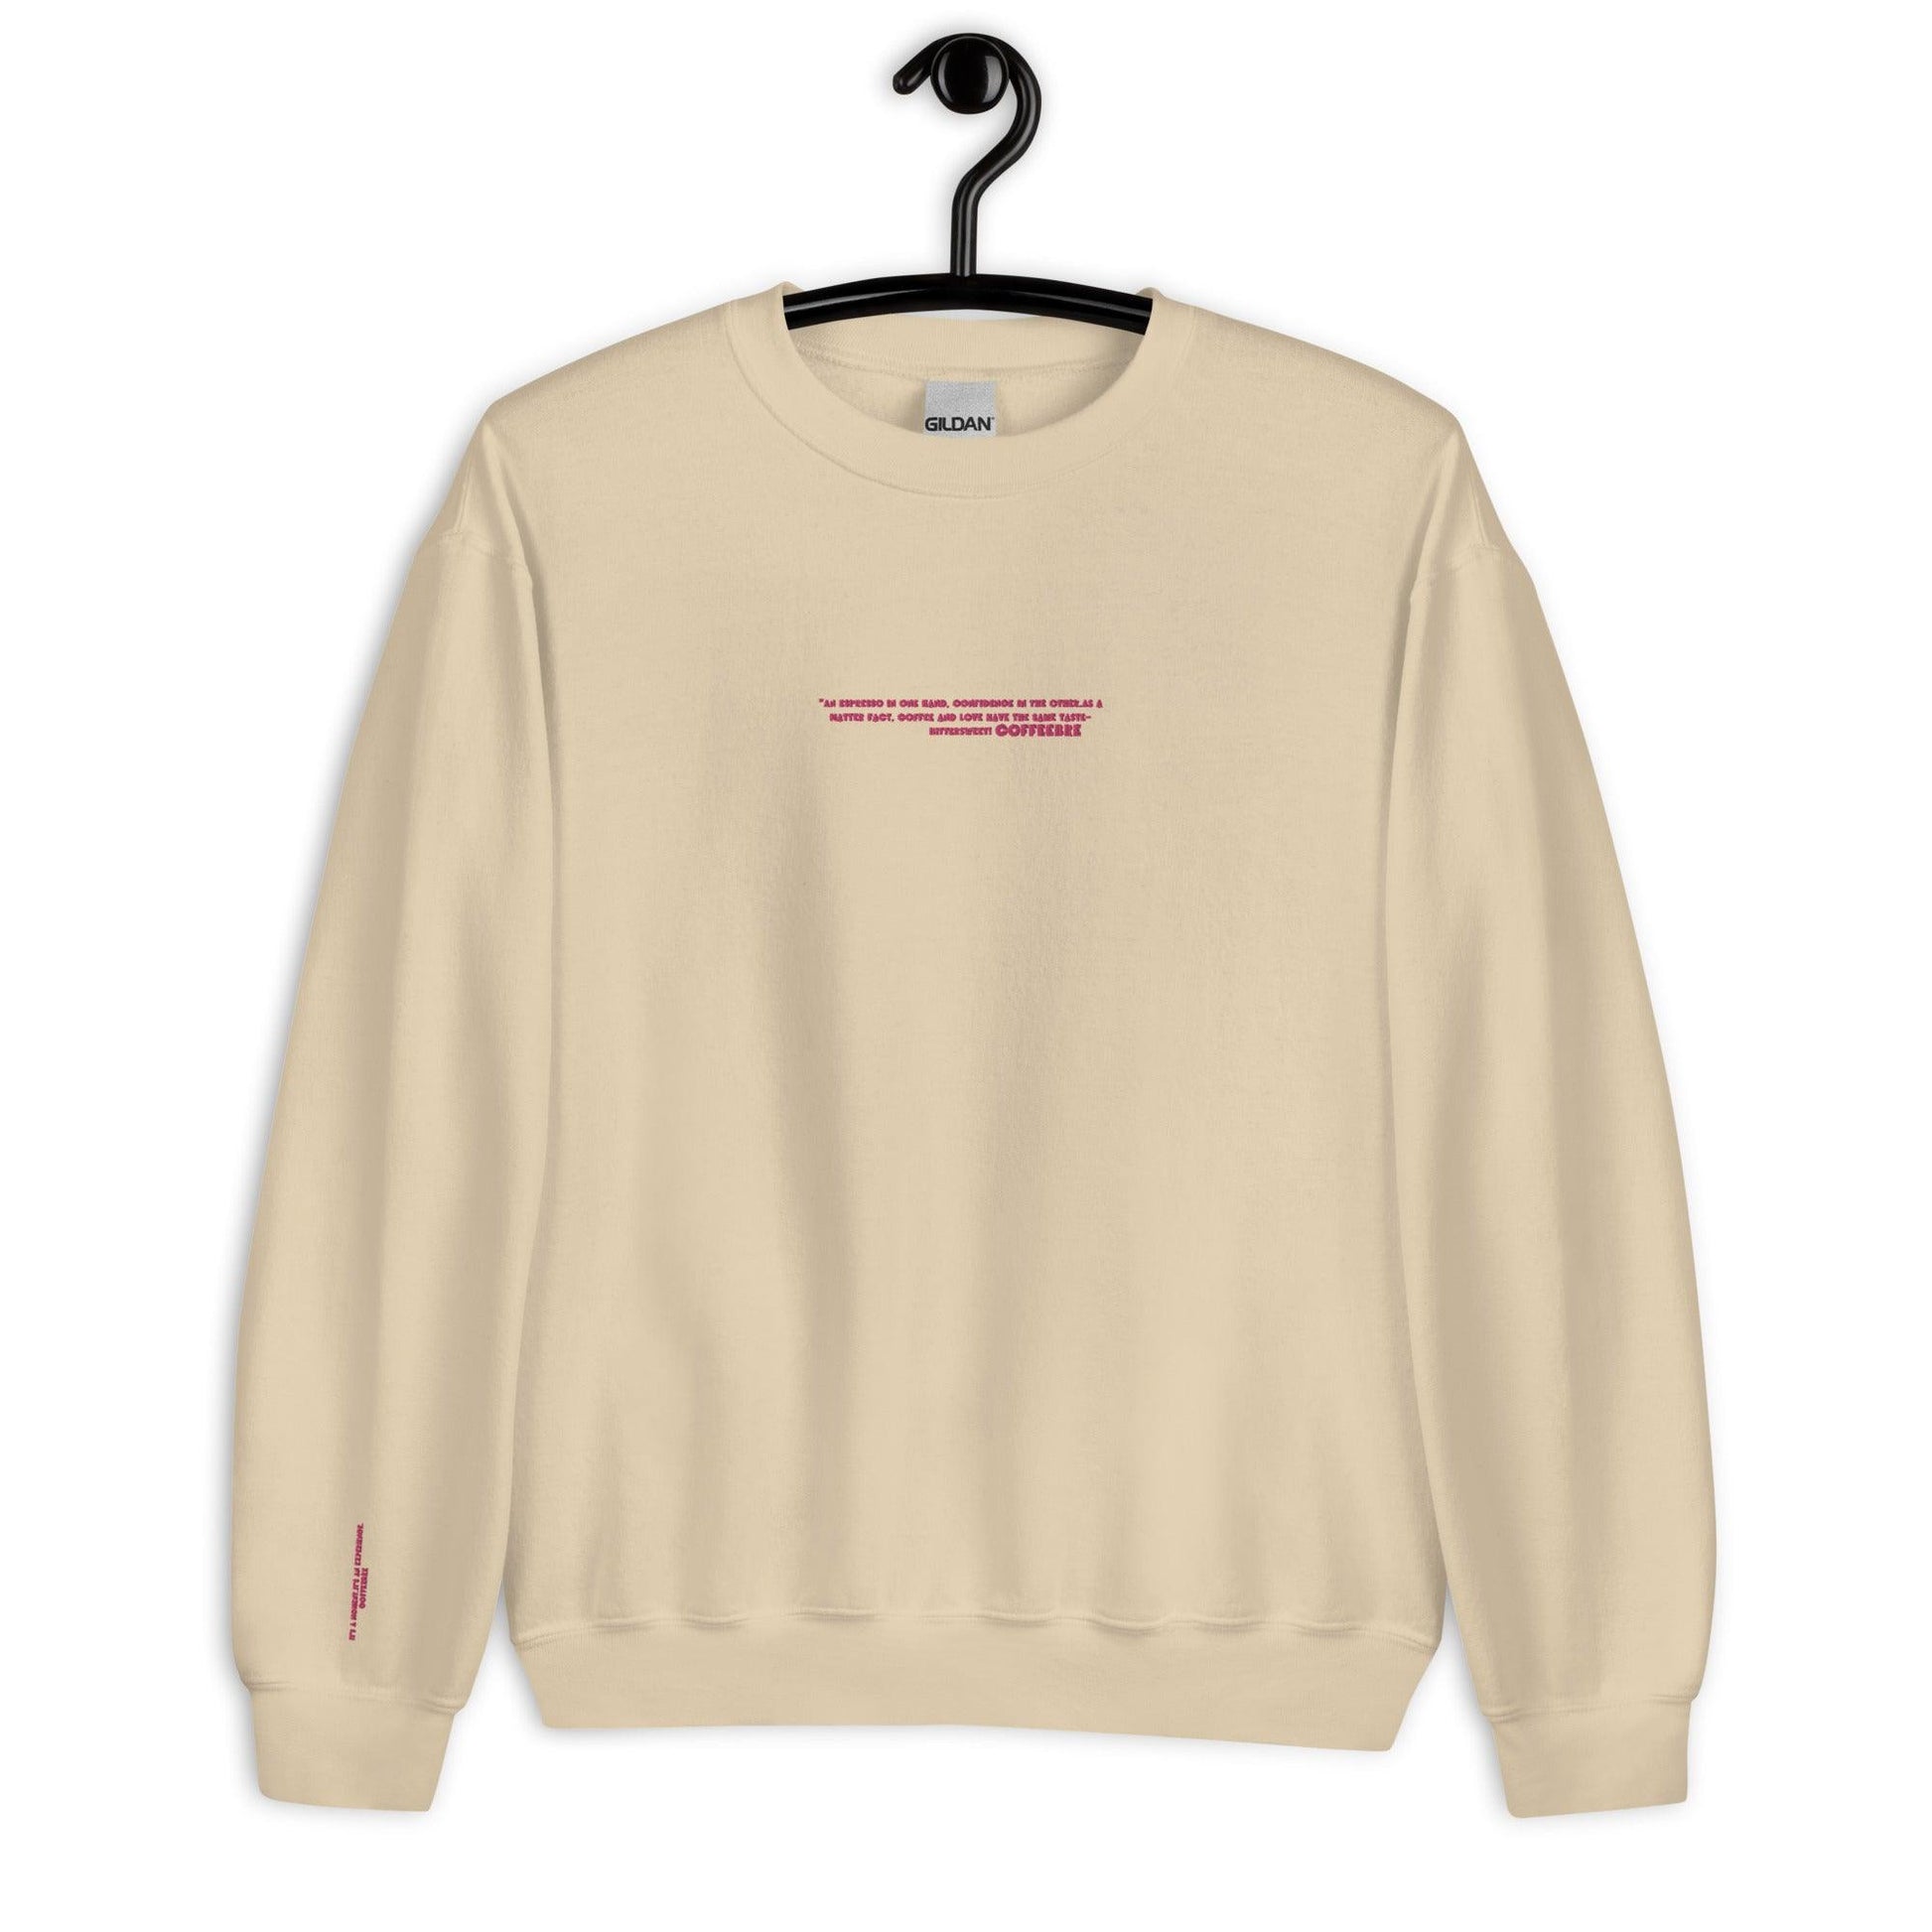 Embroidered Lifestyle Crewneck Coffee Unisex Sweatshirts - COFFEEBRE